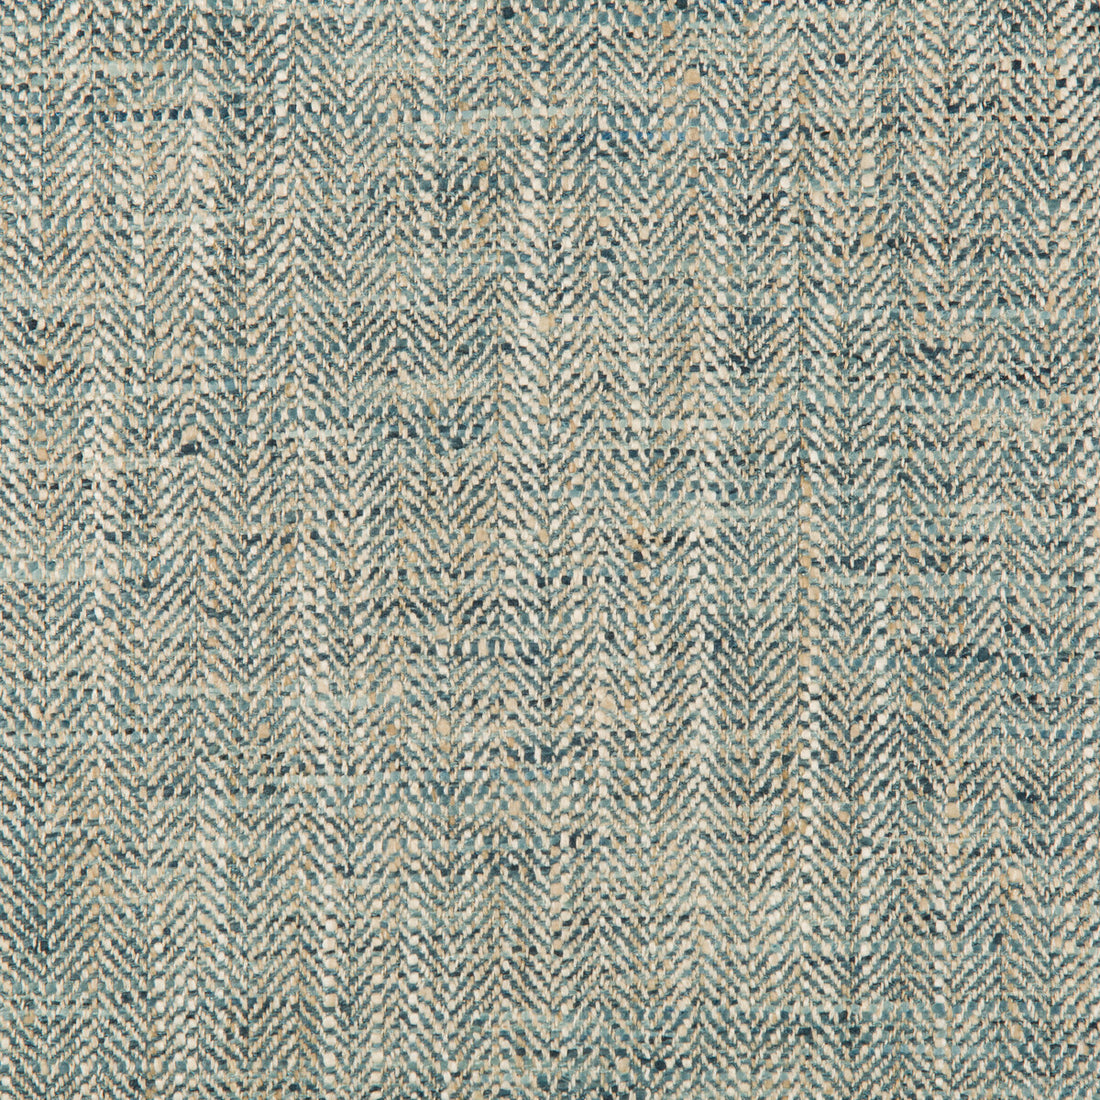 Kravet Smart fabric in 34088-1511 color - pattern 34088.1511.0 - by Kravet Smart